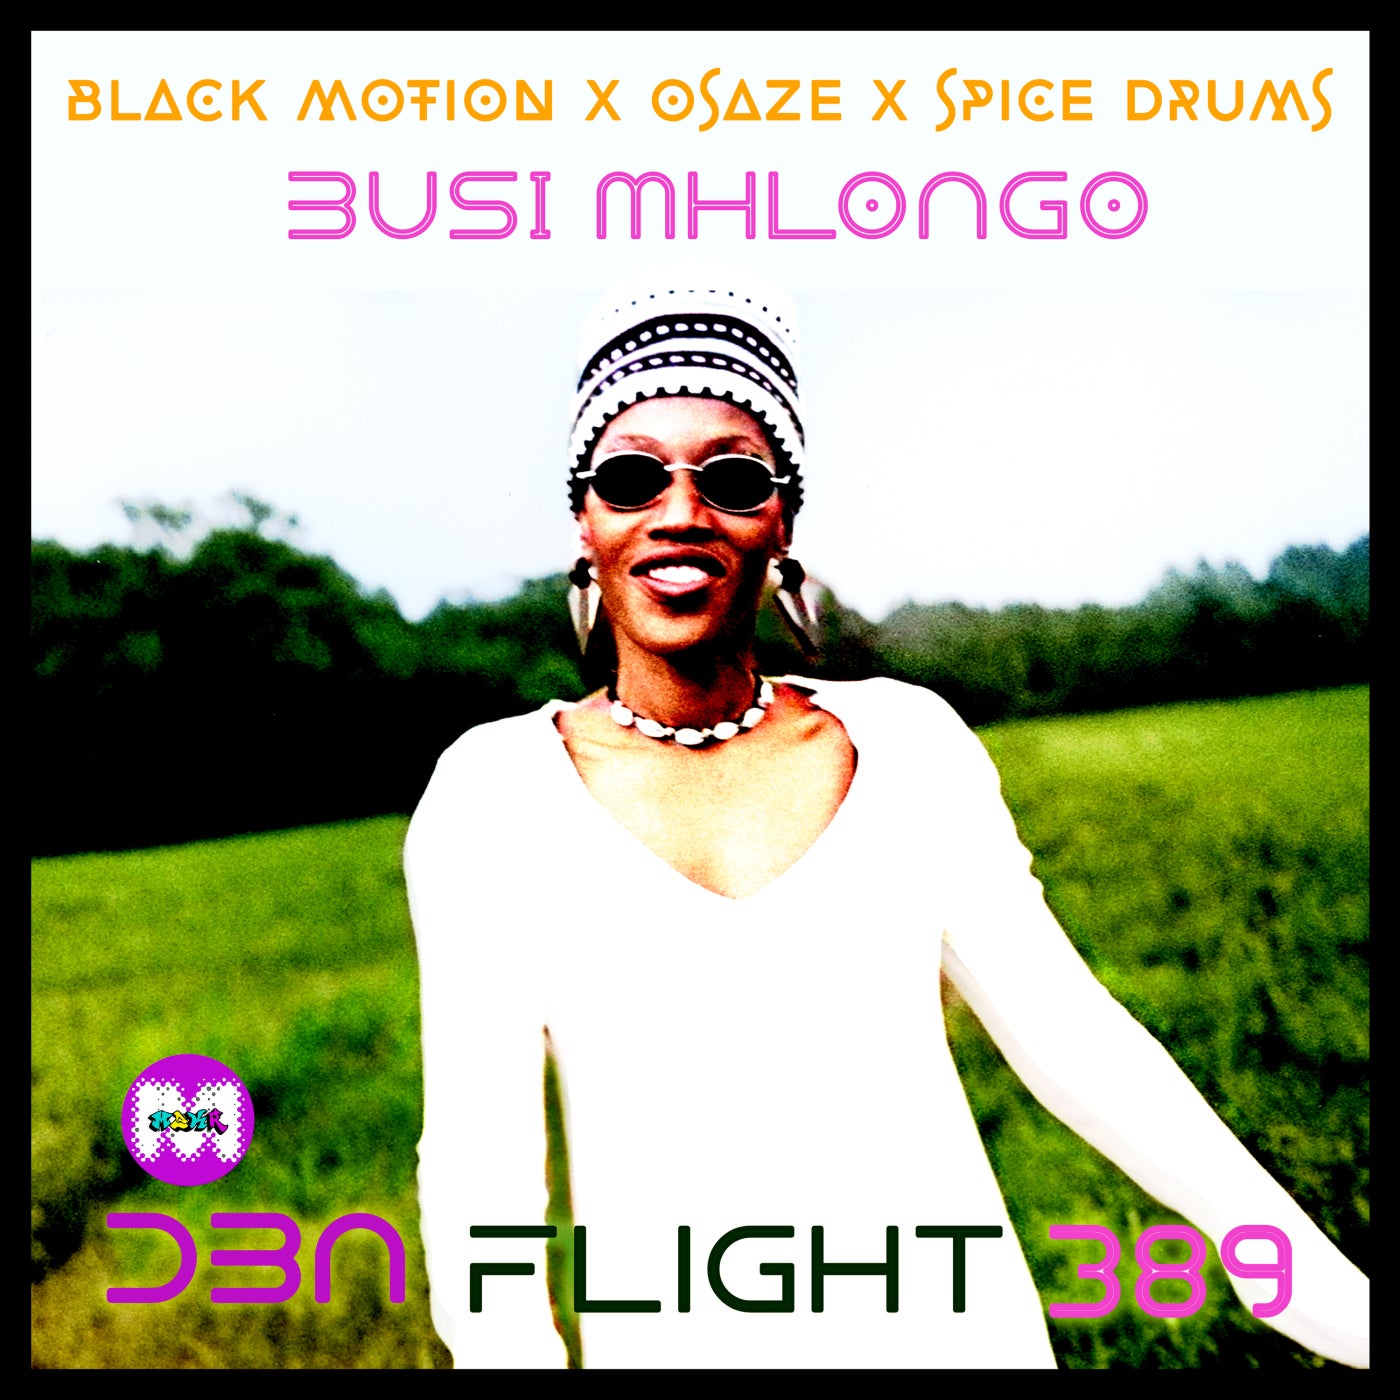 Black Motion X Osaze X Spice Drums & Busi Mhlongo